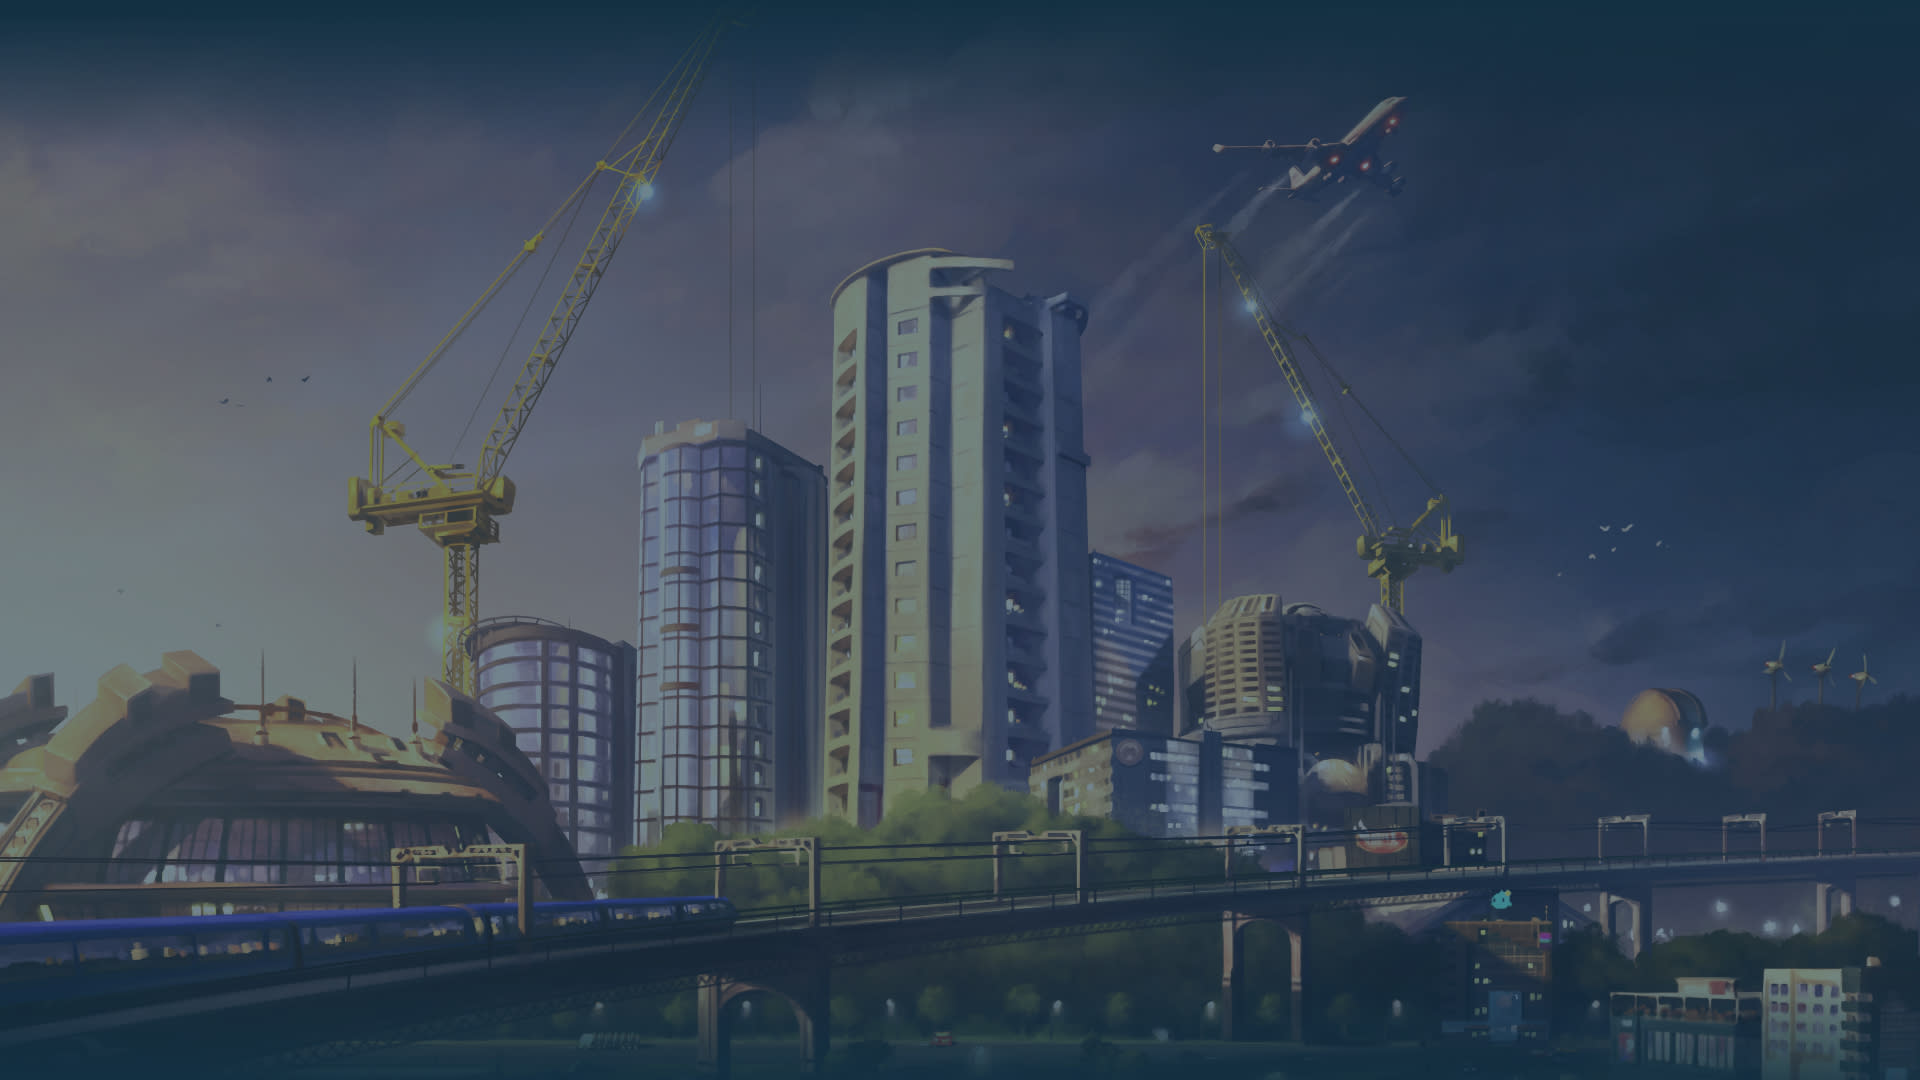 Cities Skylines 2 PC Download – Quick Download Games